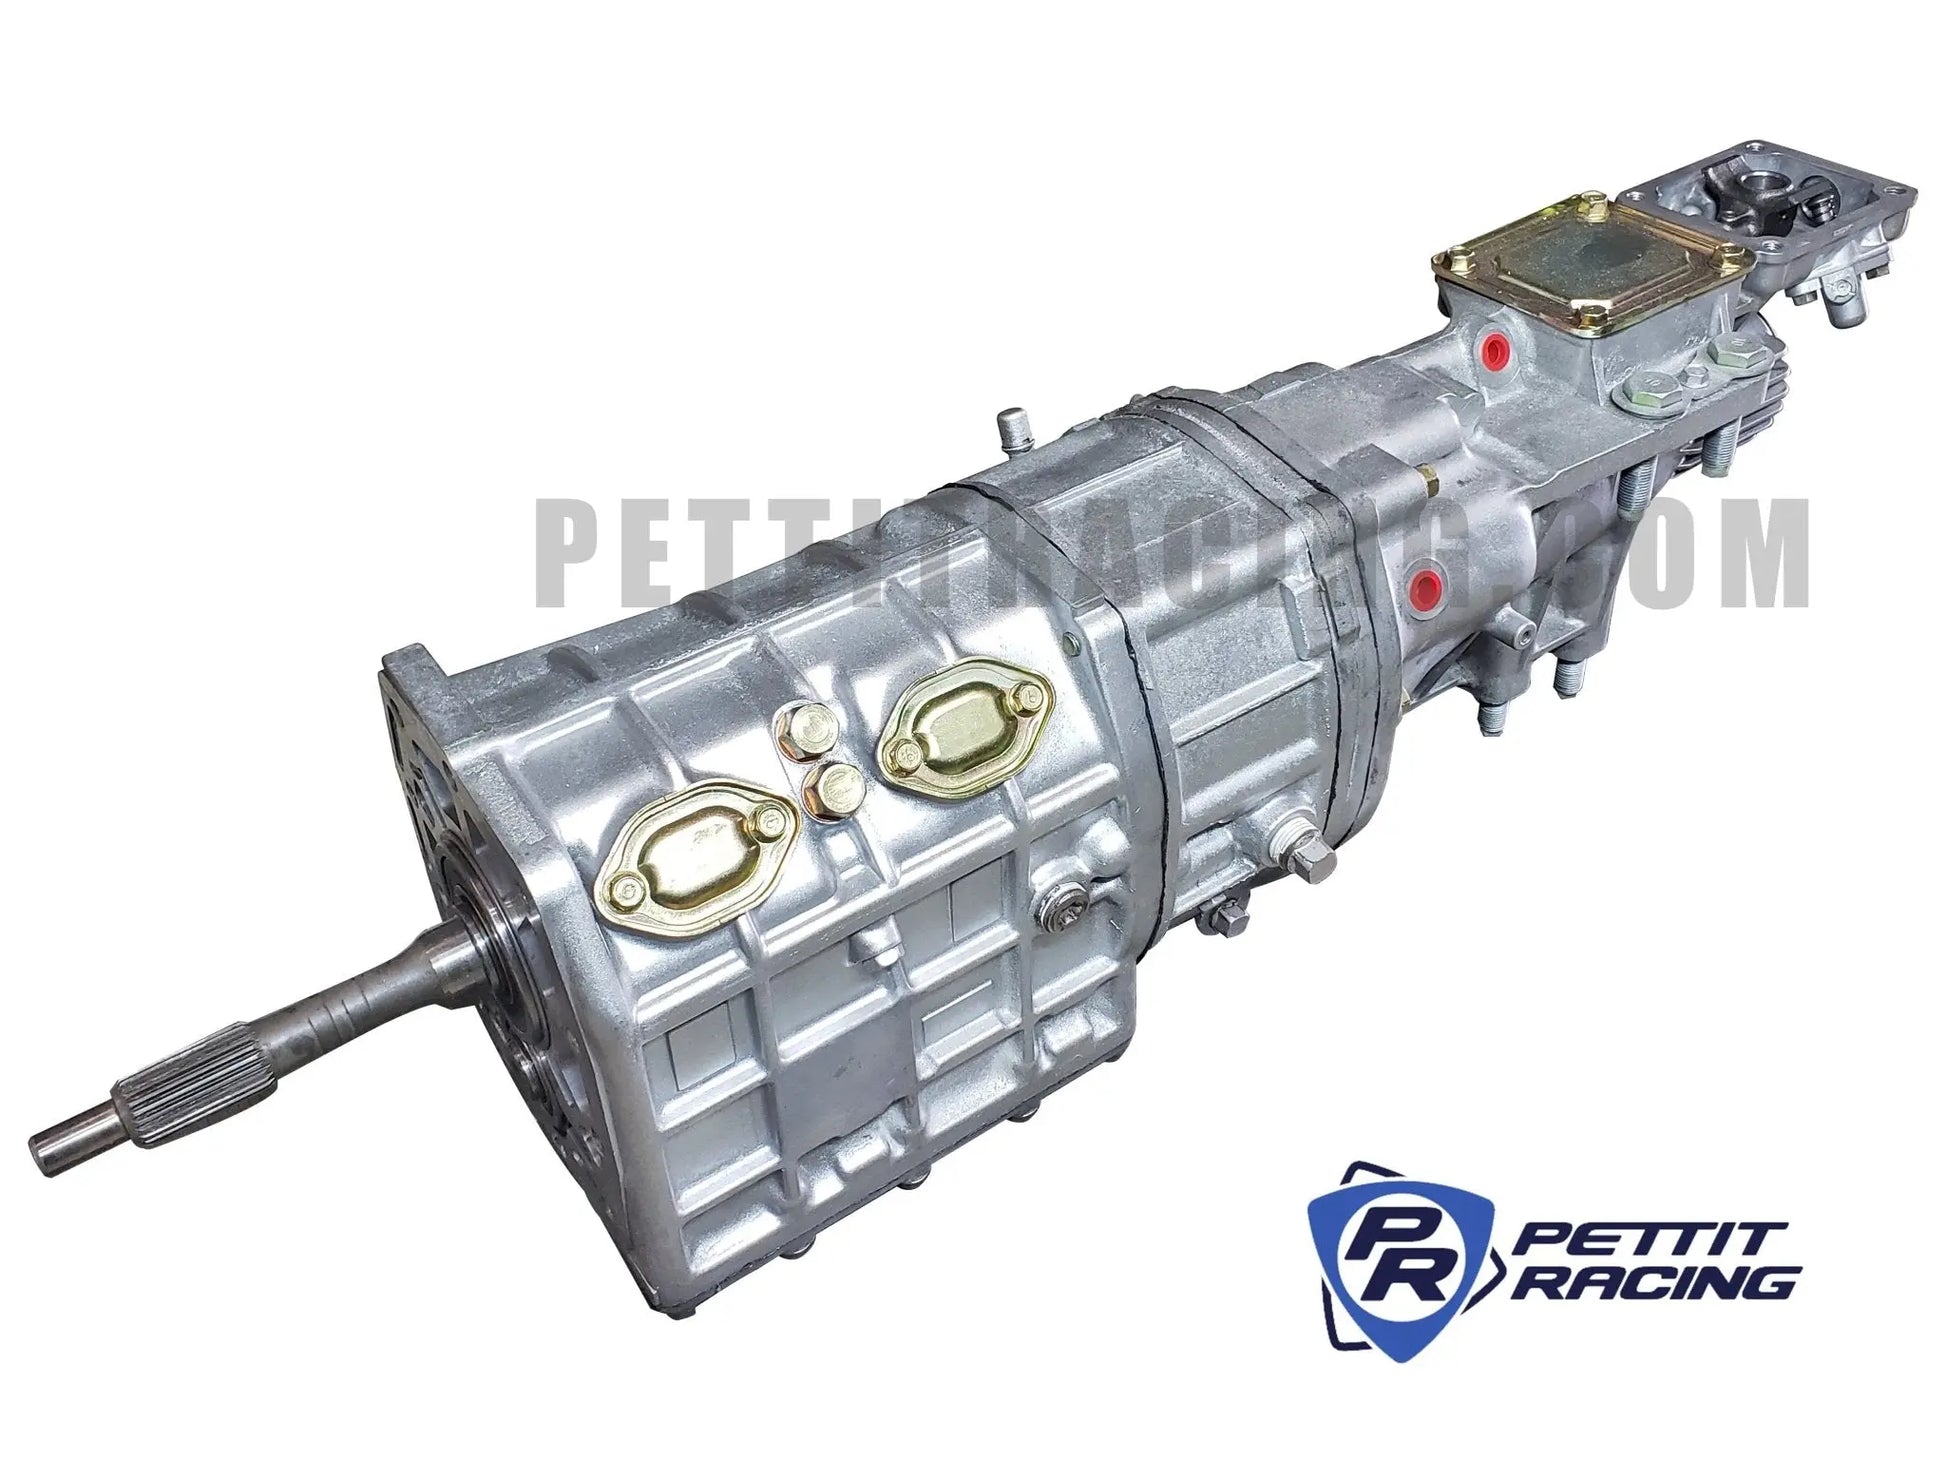 Pettit Racing Blueprinted Transmission RX7 FD3S - Pettit Racing